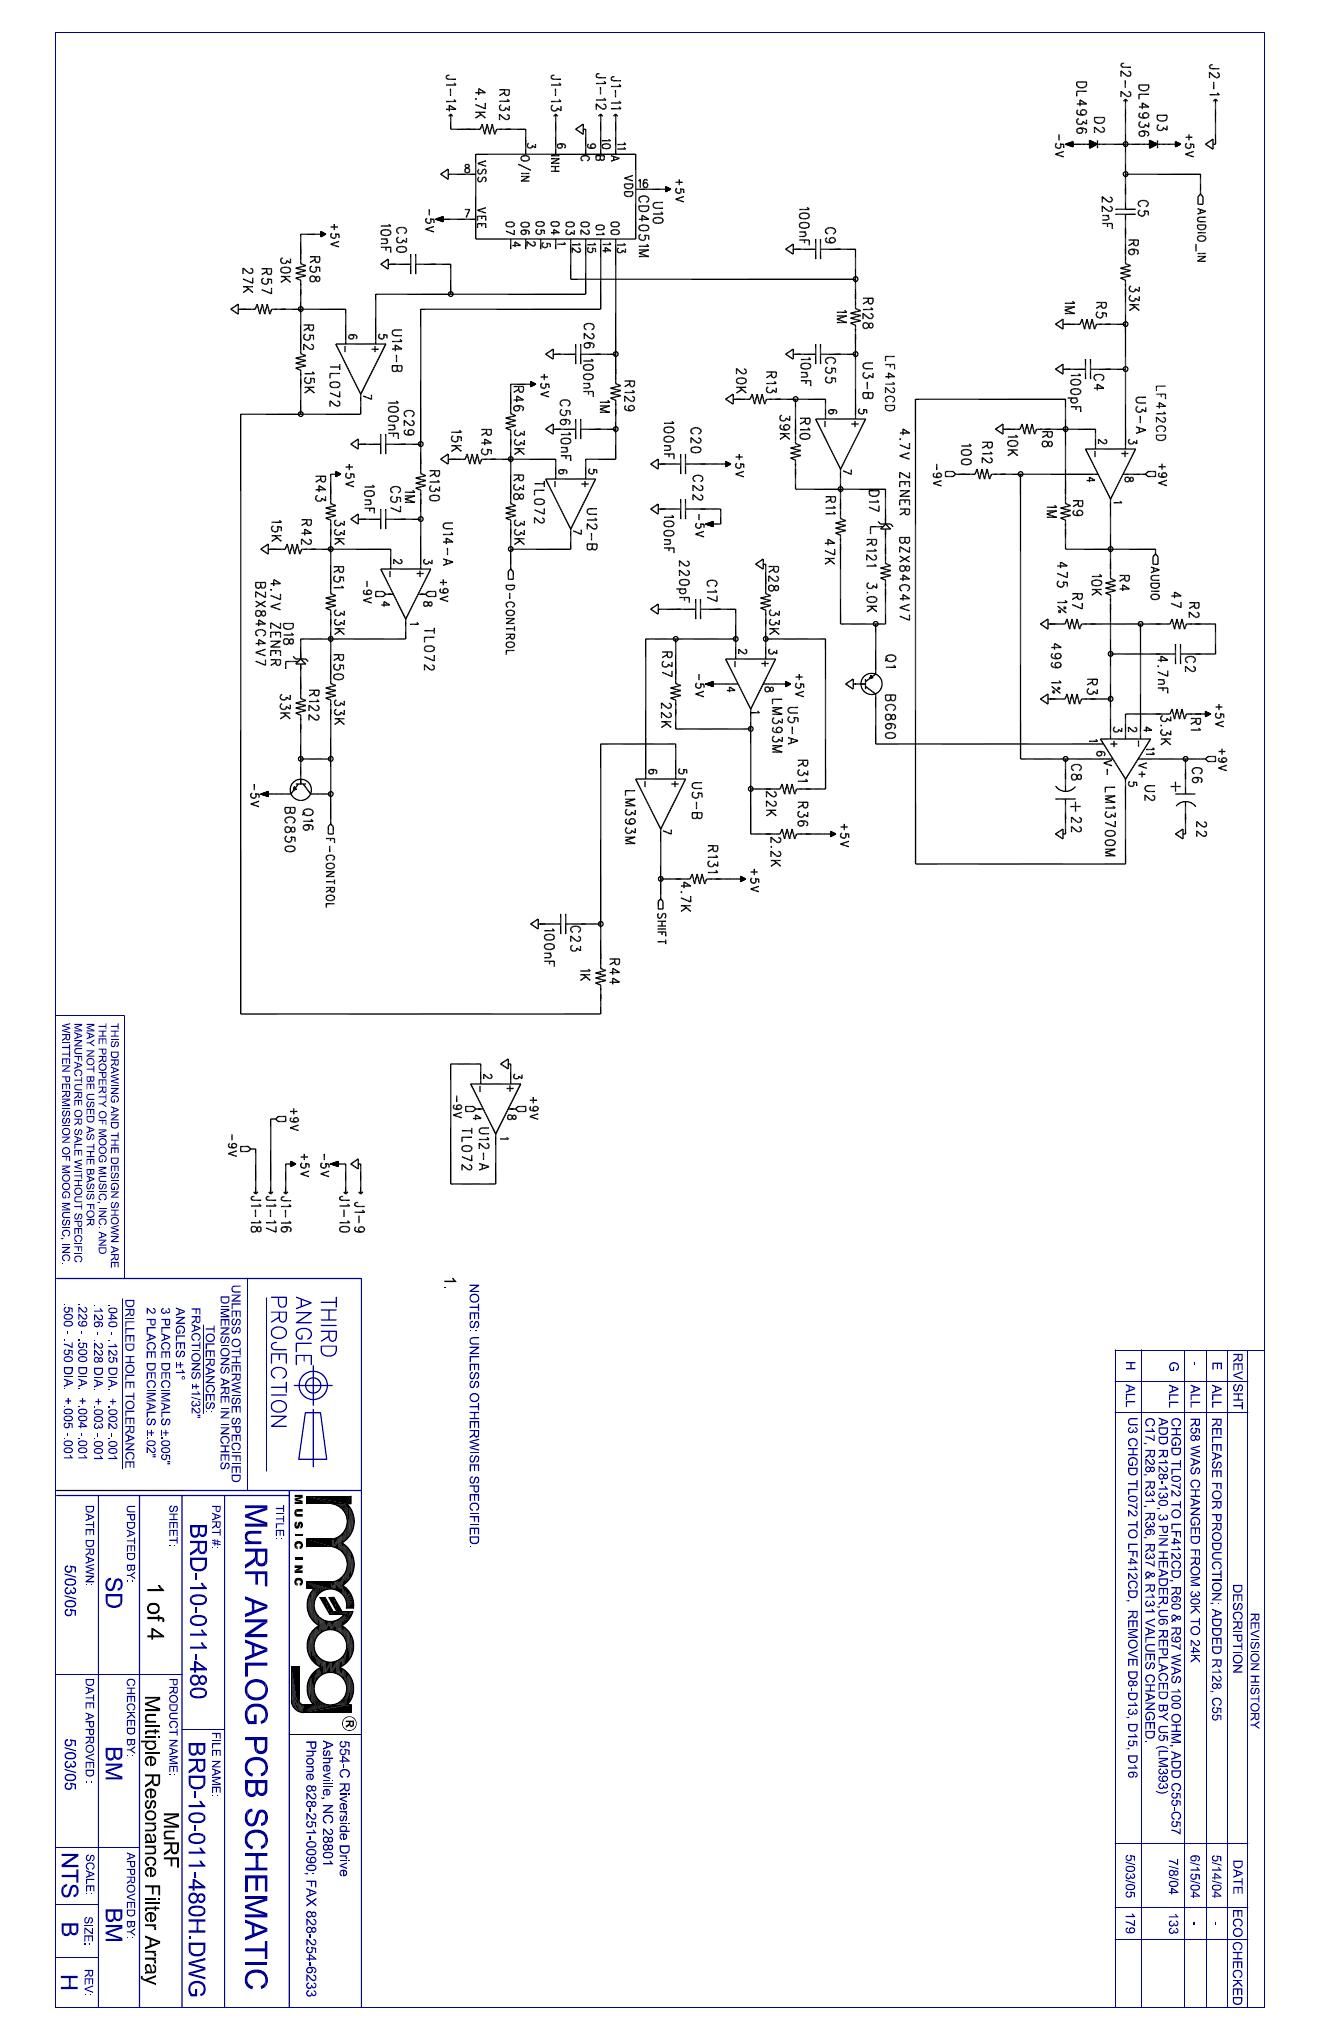 moog murf mf 105 schematics